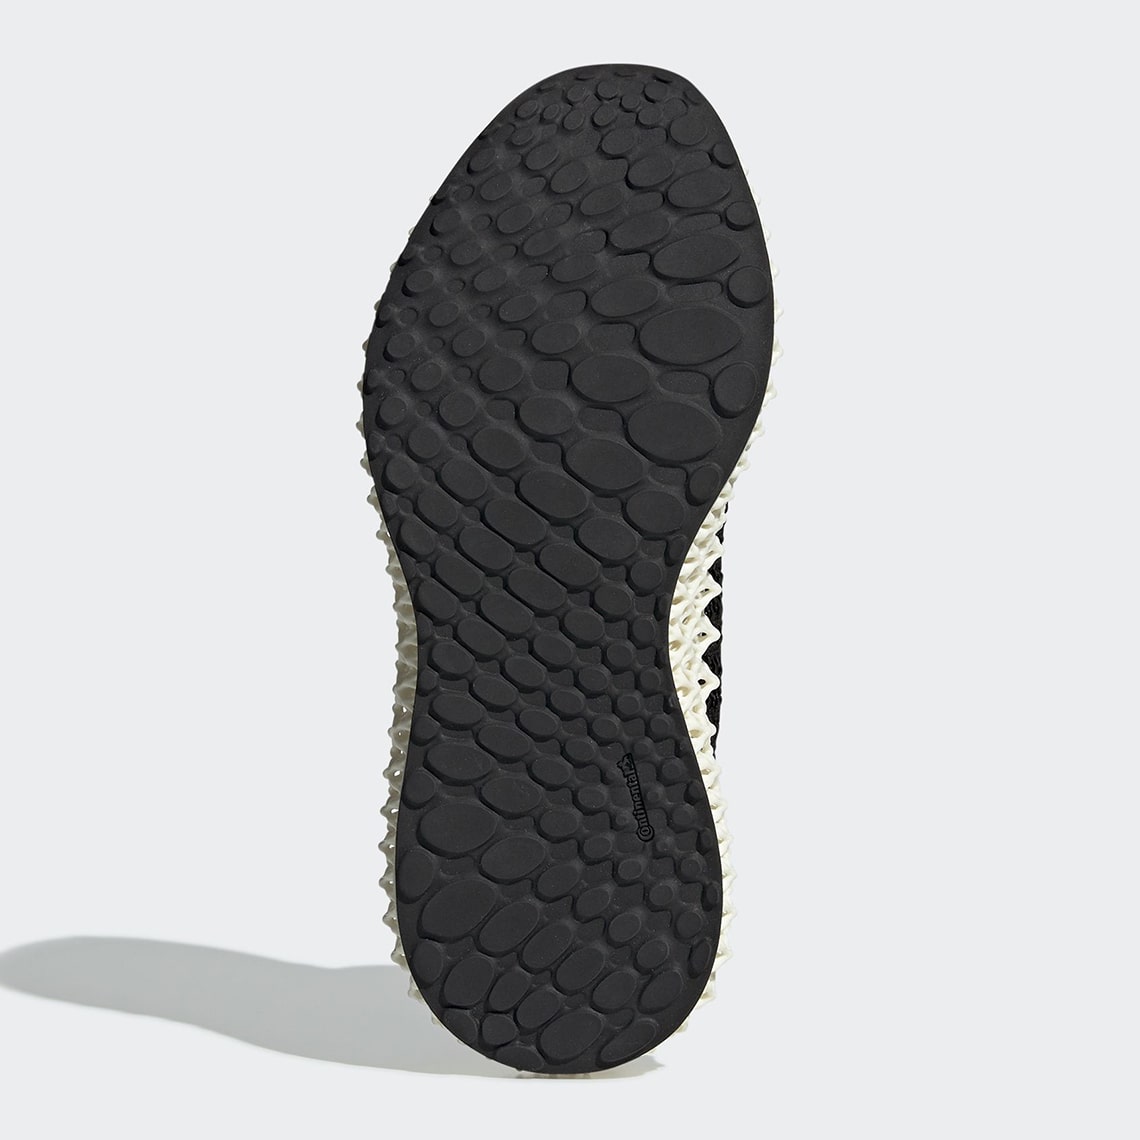 The Next Adidas Futurecraft 4d Shoe Is A Stella Mccartney Collaboration House Of Heat